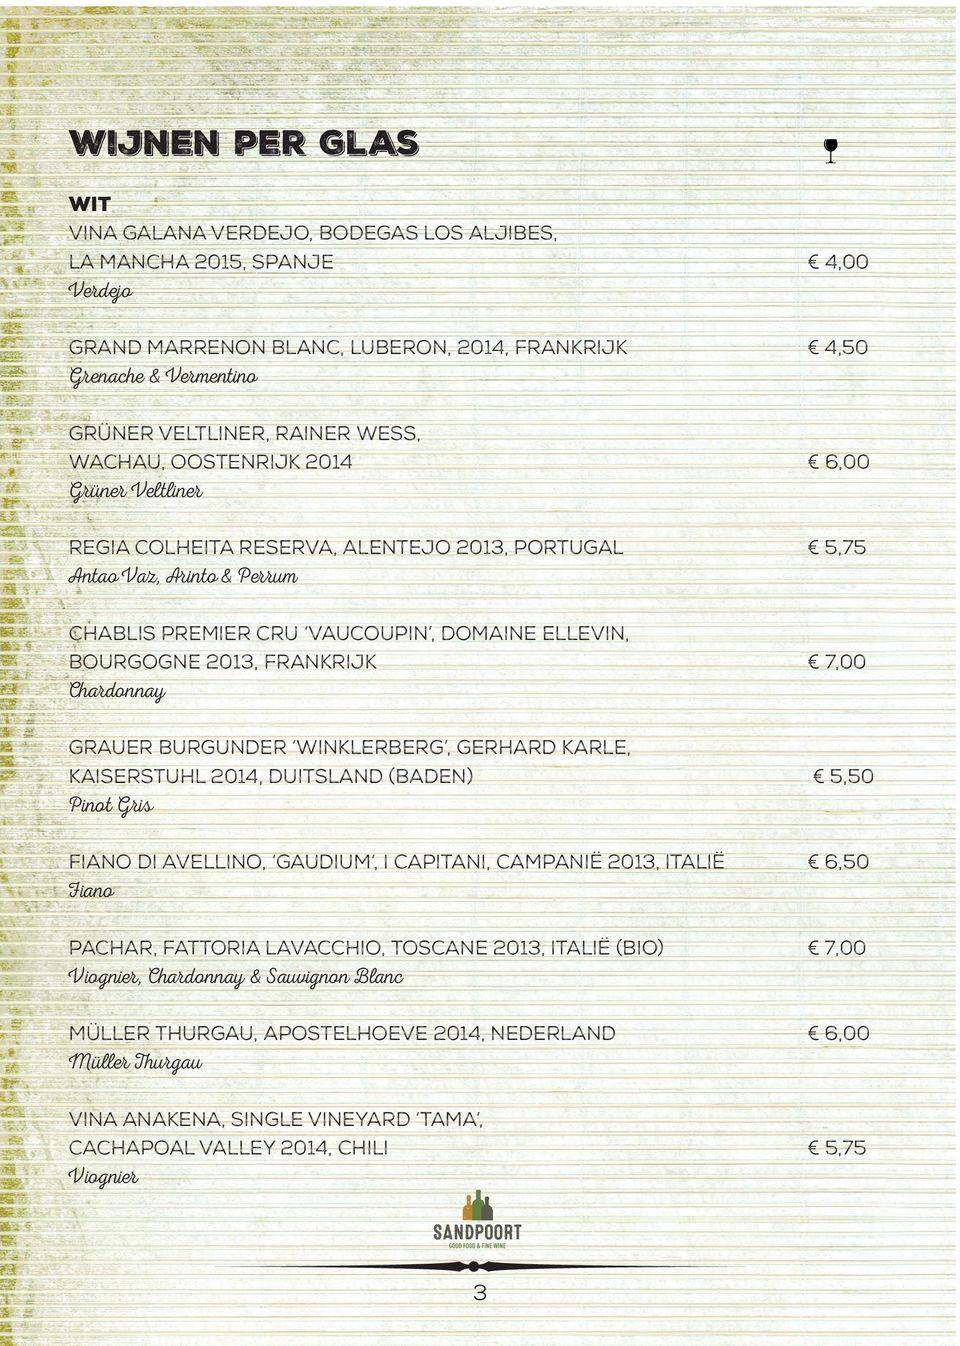 7,00 Chardonnay Grauer Burgunder Winklerberg, Gerhard Karle, Kaiserstuhl 2014, Duitsland (BADEN) 5,50 Pinot Gris Fiano di Avellino, Gaudium, I Capitani, Campanië 2013, Italië 6,50 Fiano Pachar,